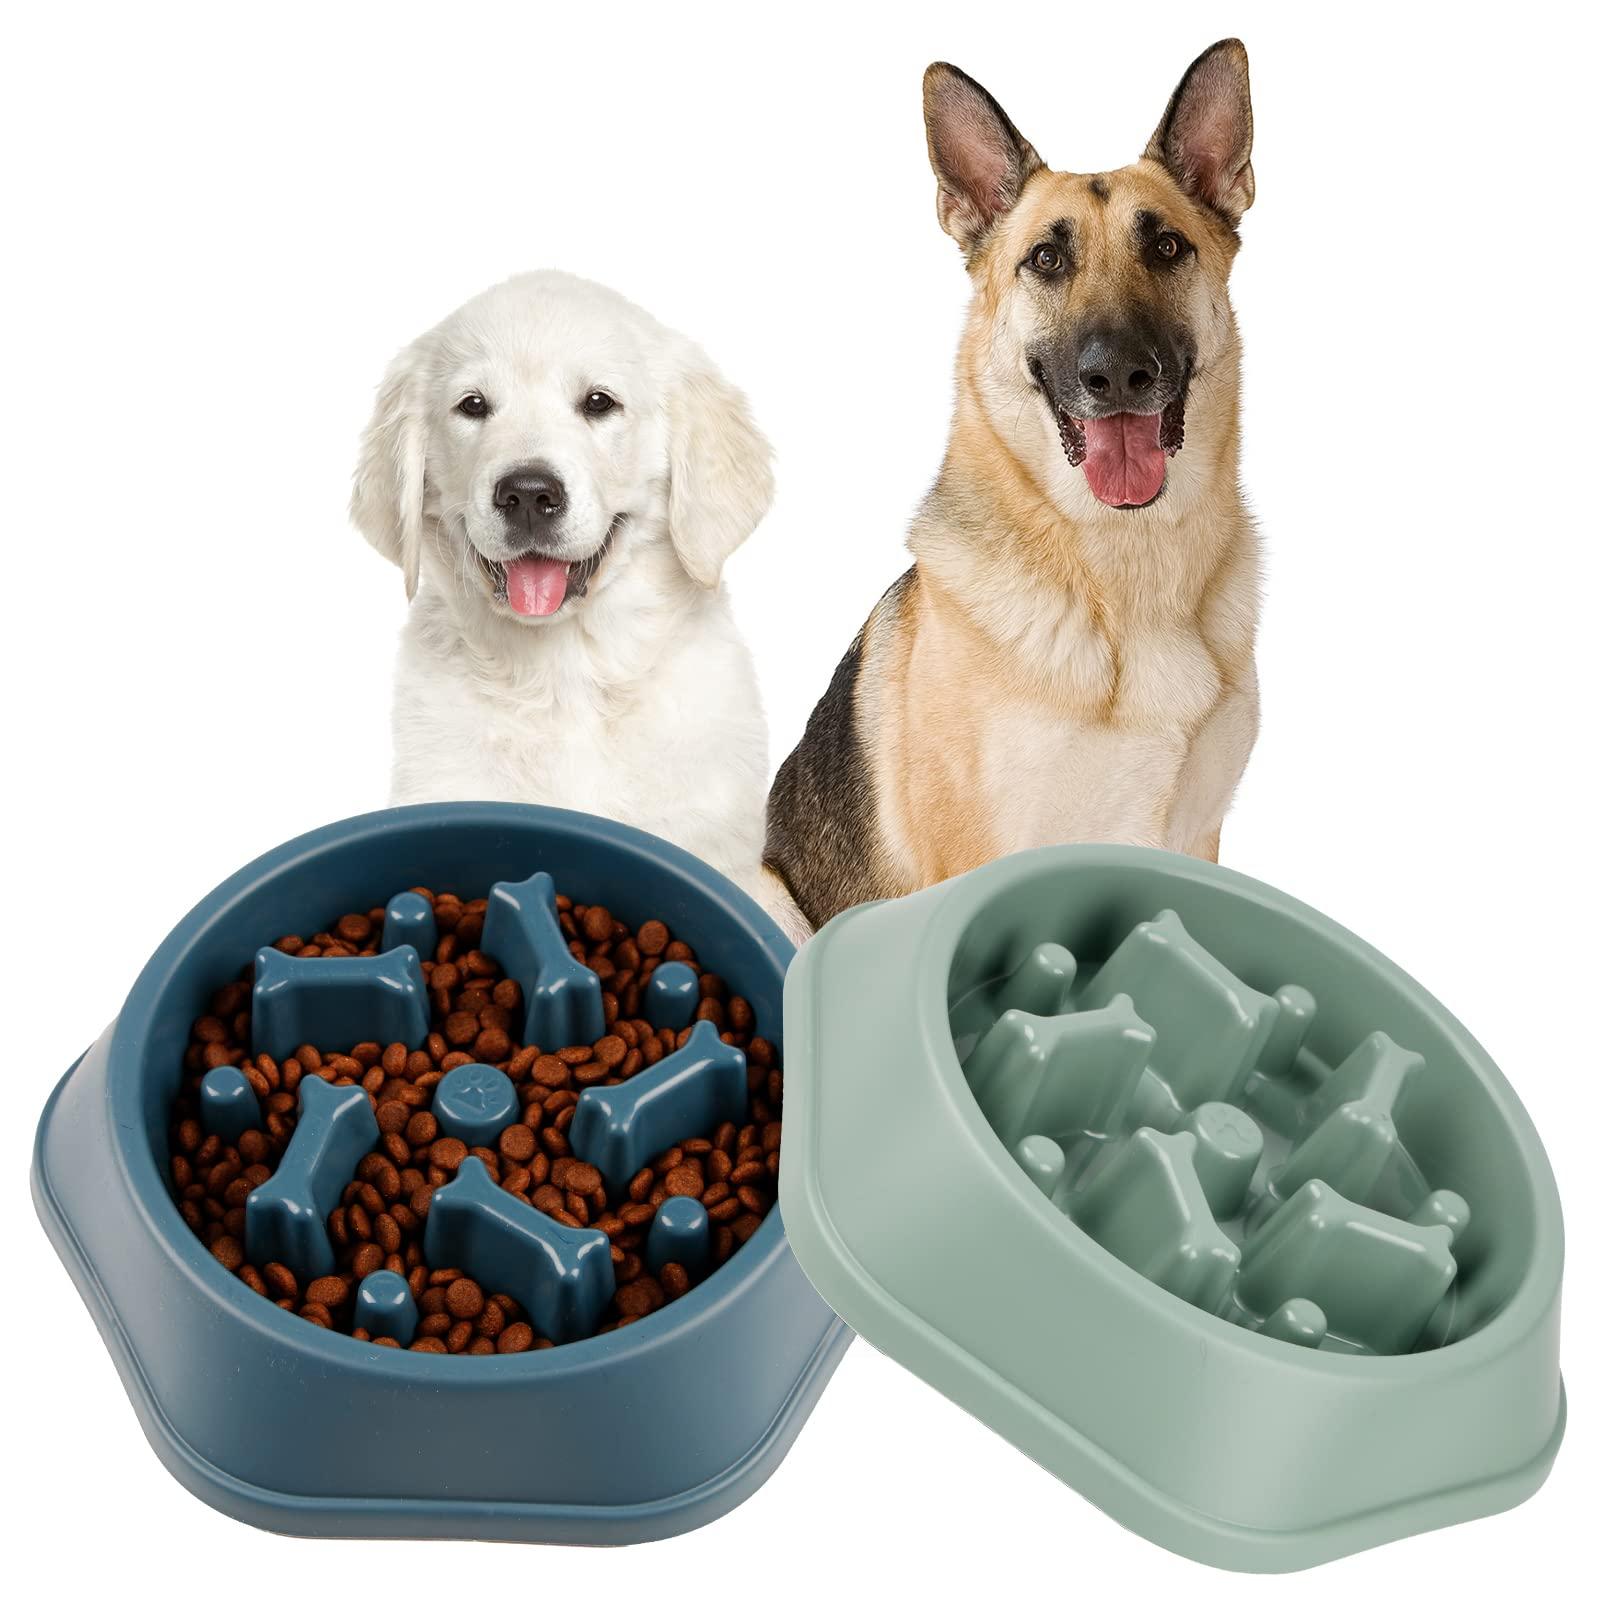 Dpoegts 2 Packs Slow Feeder Dog Bowl, Puzzle Dog Food Bowl Anti-Gulping Interactive Dog Bowl For Smallmedium Sized Dogs (Bluegreen)